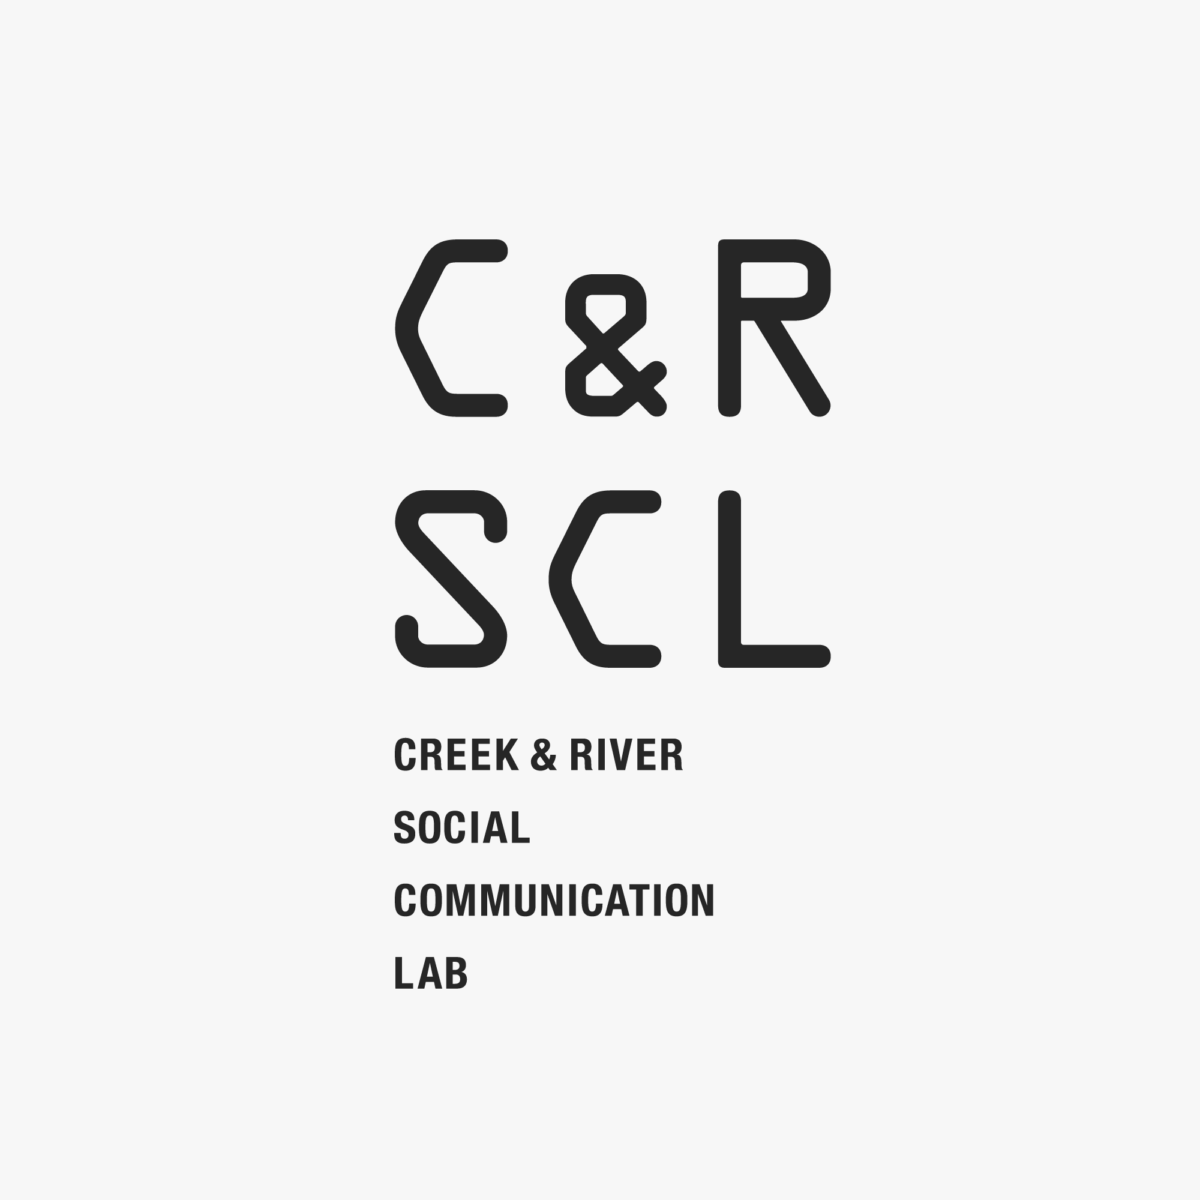 CREEK & RIVER SCL